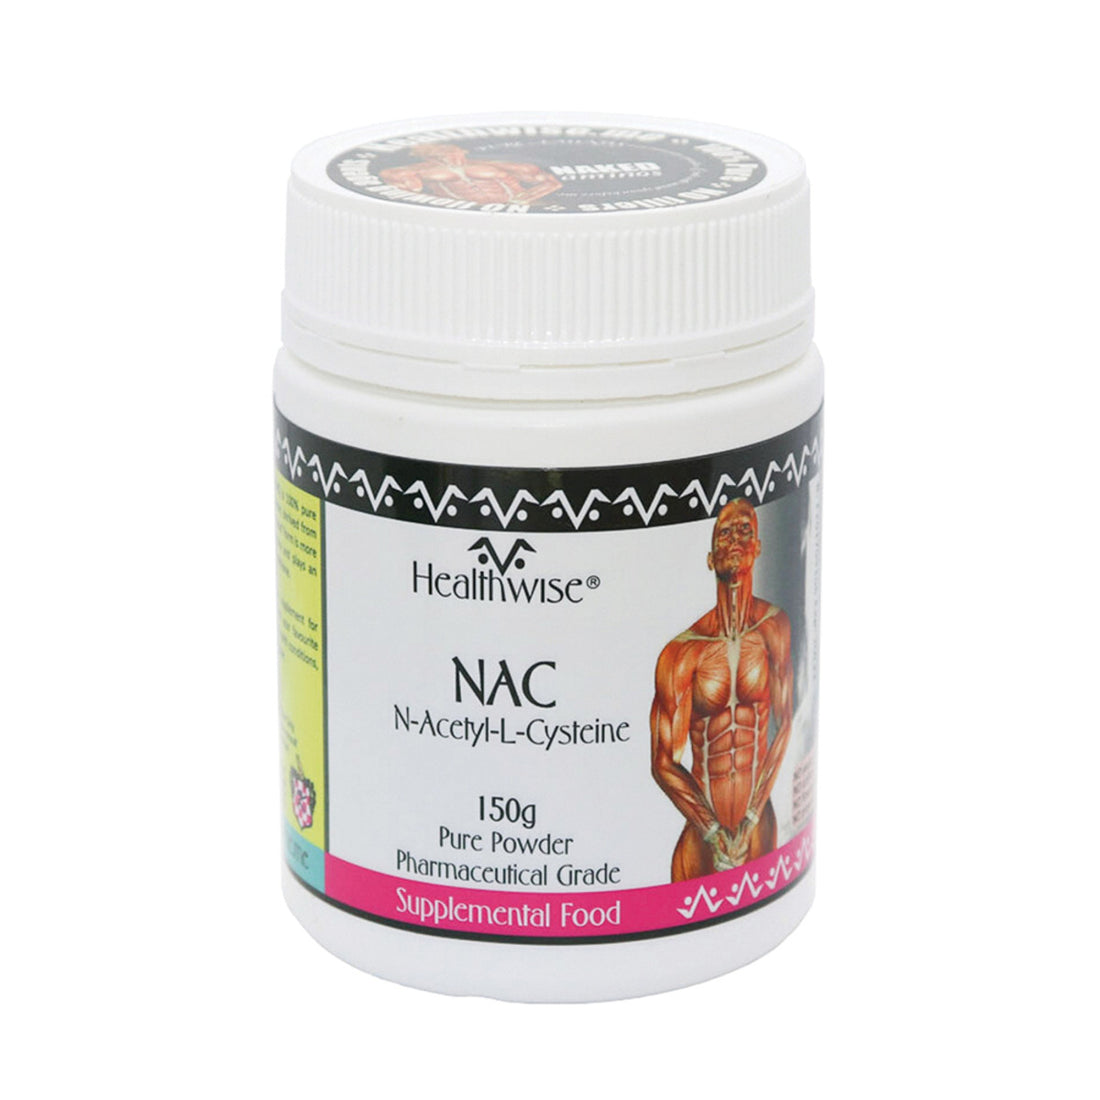 HealthWise® NAC: N-Acetyl-L-CYSTEINE 150G